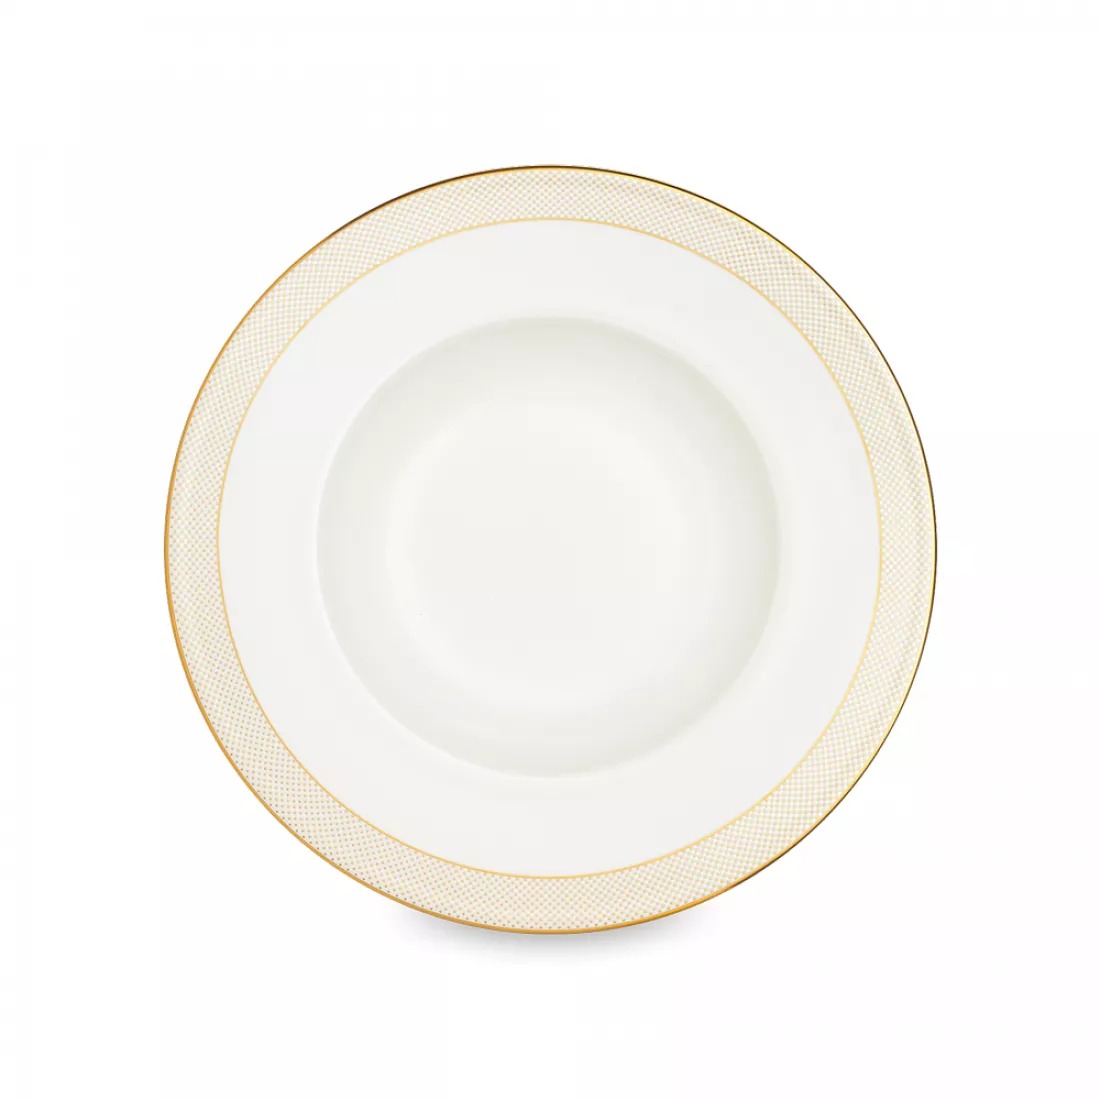 Тарелка суповая Narumi Золотая паутина 23 см, фарфор костяной тарелка суповая фарфор 23 см круглая гуси bernadotte p1750003jqz5936b59